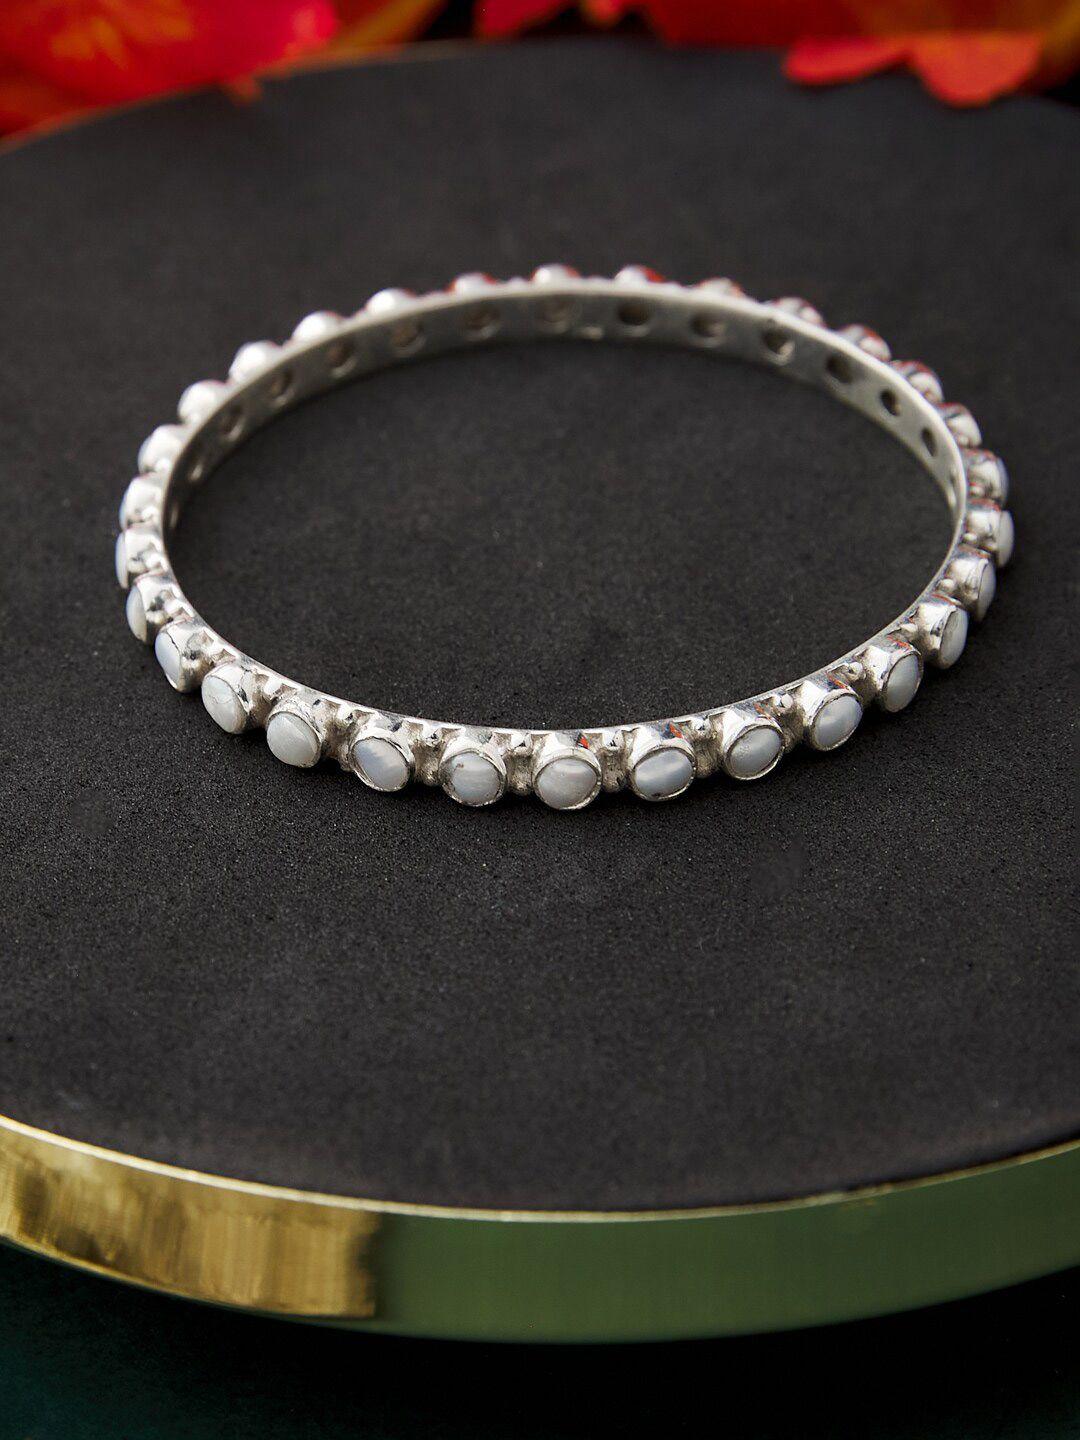 fabindia-women-white-silver-pearls-bangle-style-bracelet